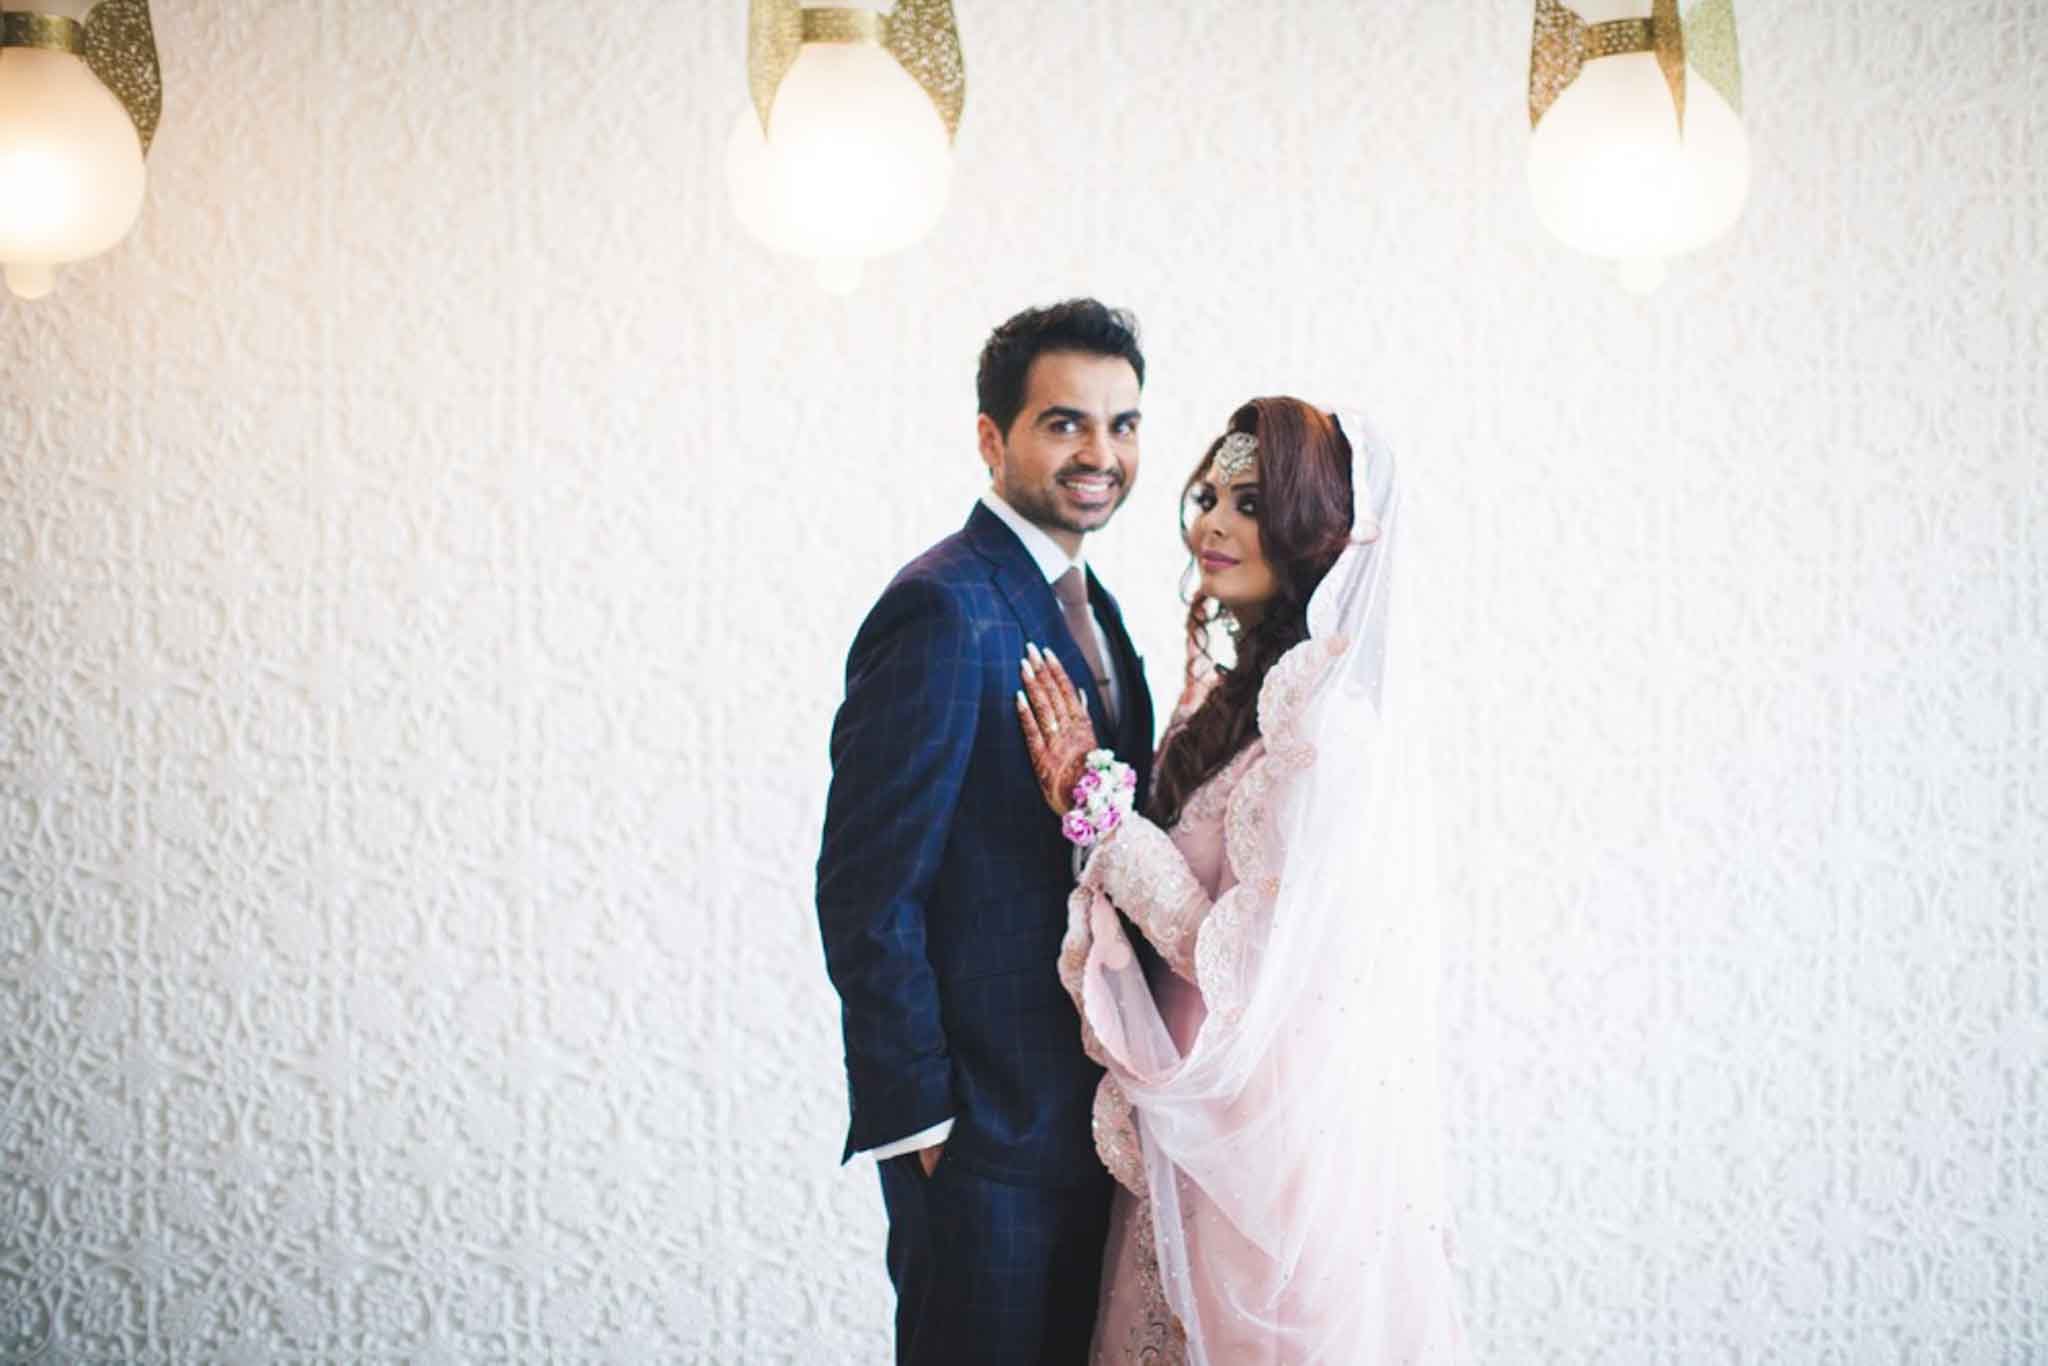 Aga Khan Museum Toronto Wedding Photography-12.jpg